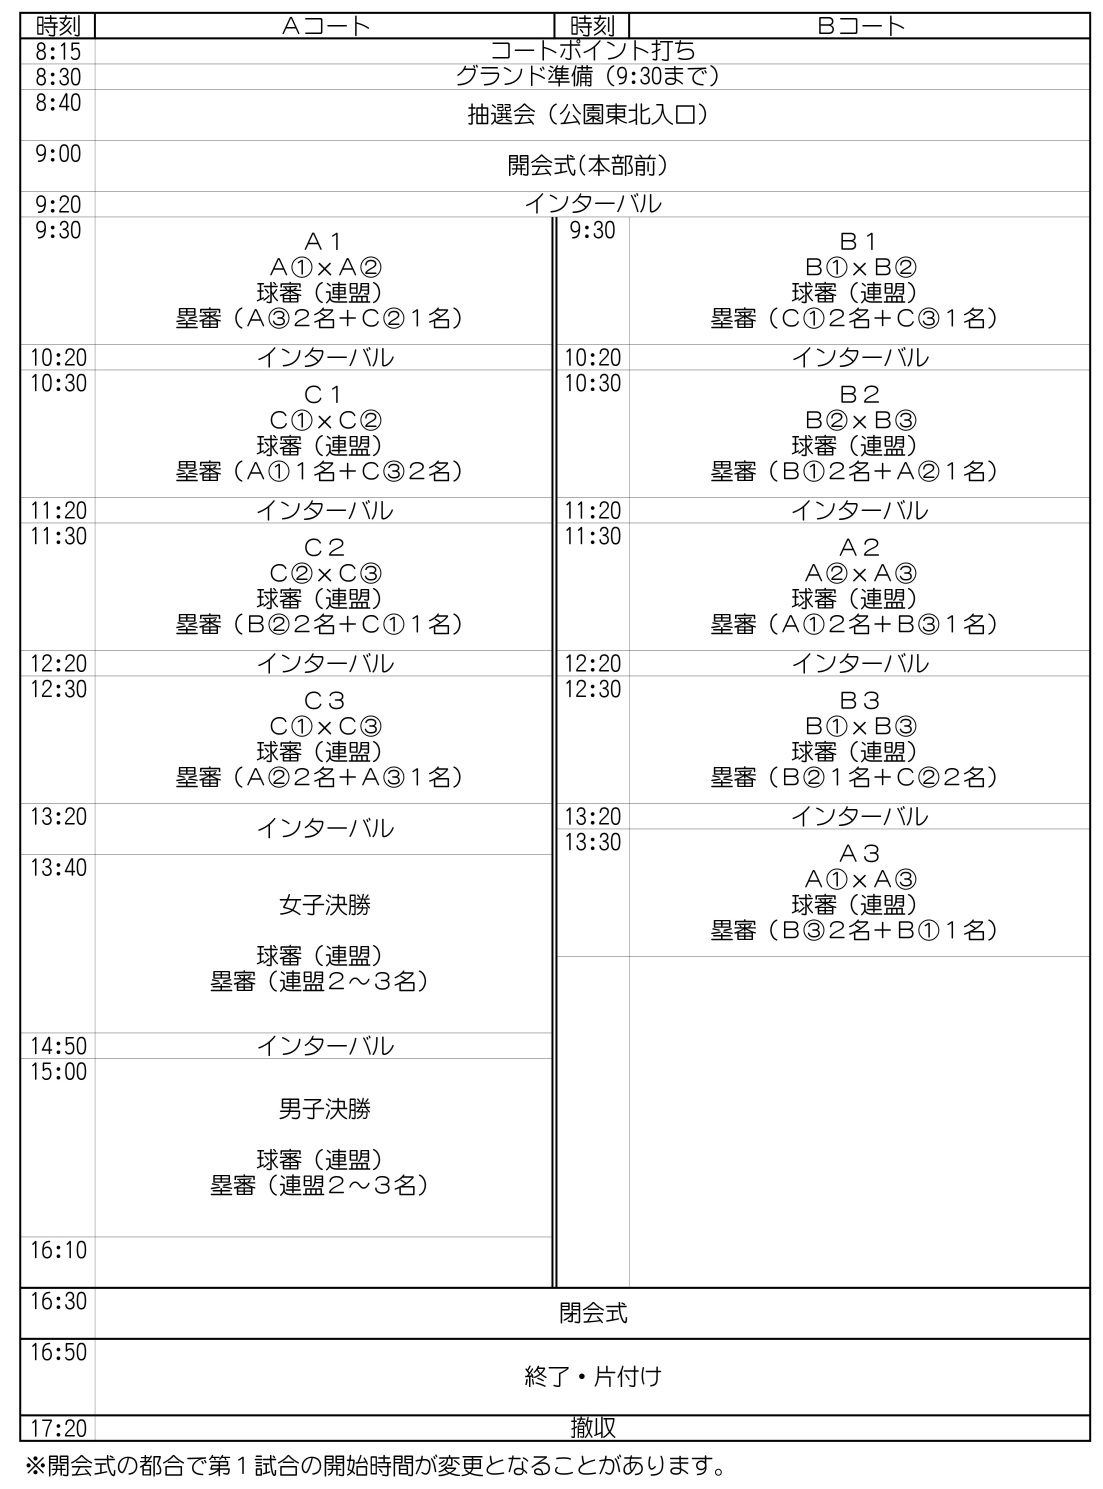 20180729time-schedule.jpg